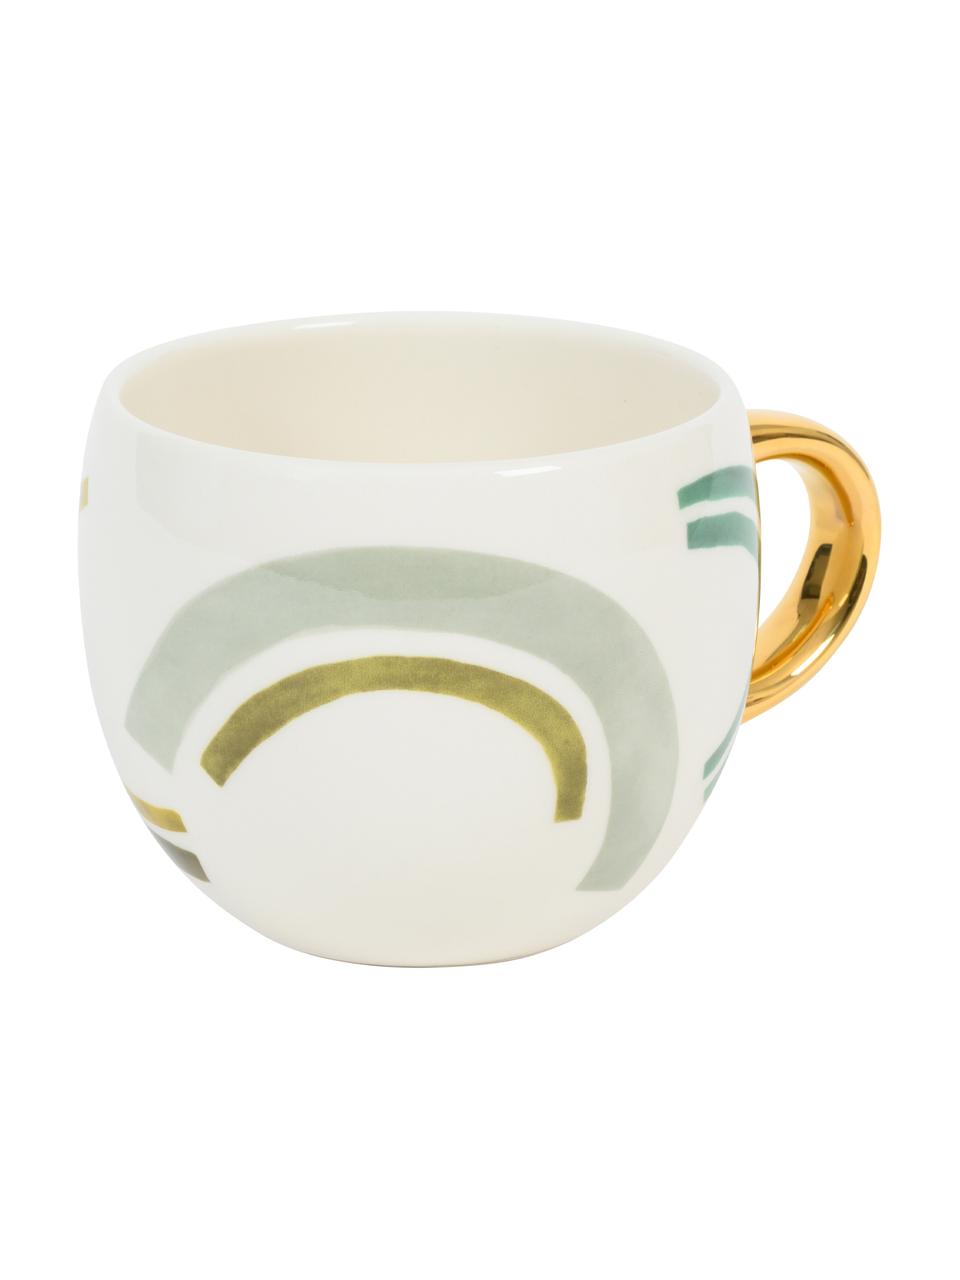 Bemalte Tasse Bounce mit goldenem Griff, Steingut, Mehrfarbig, Ø 11 x H 9 cm